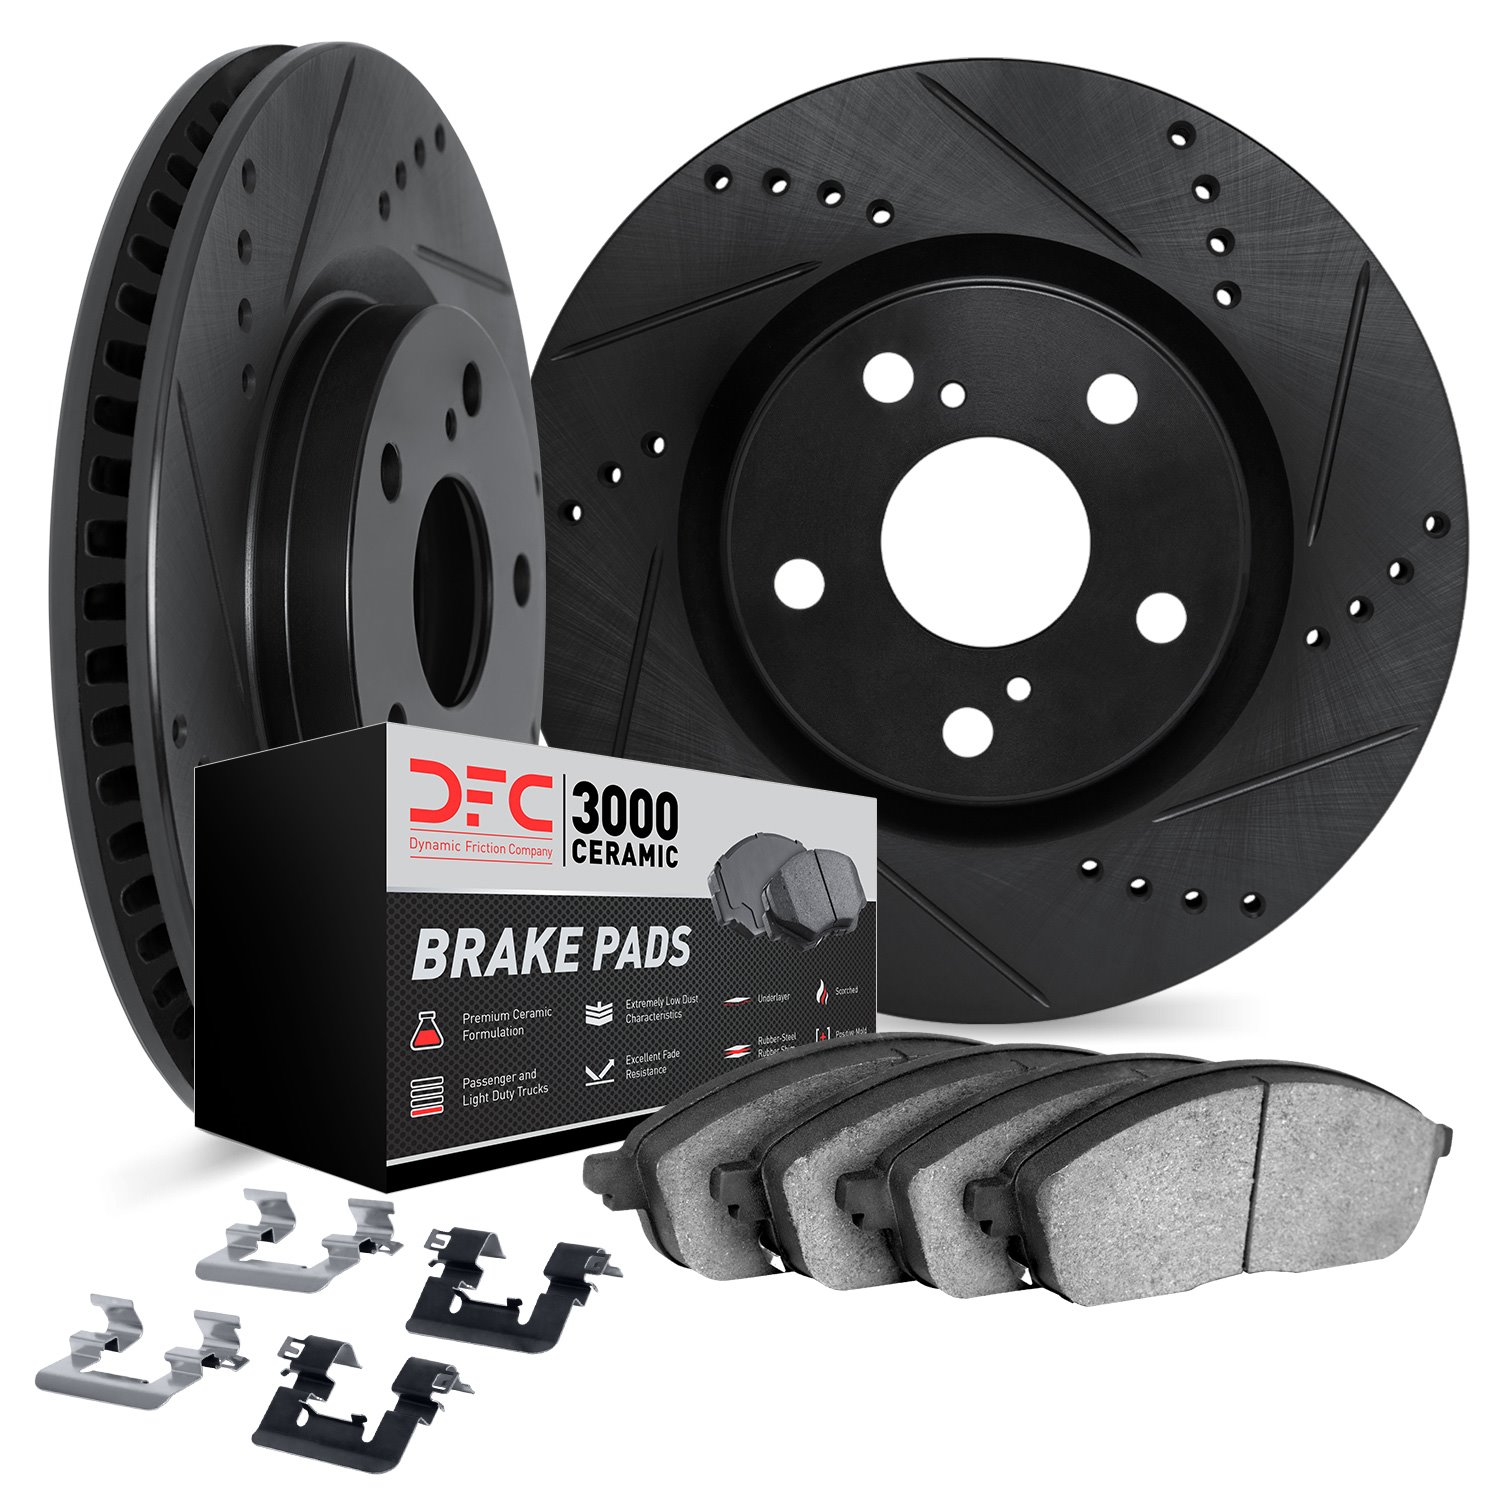 8312-59068 Drilled/Slotted Brake Rotors with 3000-Series Ceramic Brake Pads Kit & Hardware [Black], 2012-2016 Acura/Honda, Posit